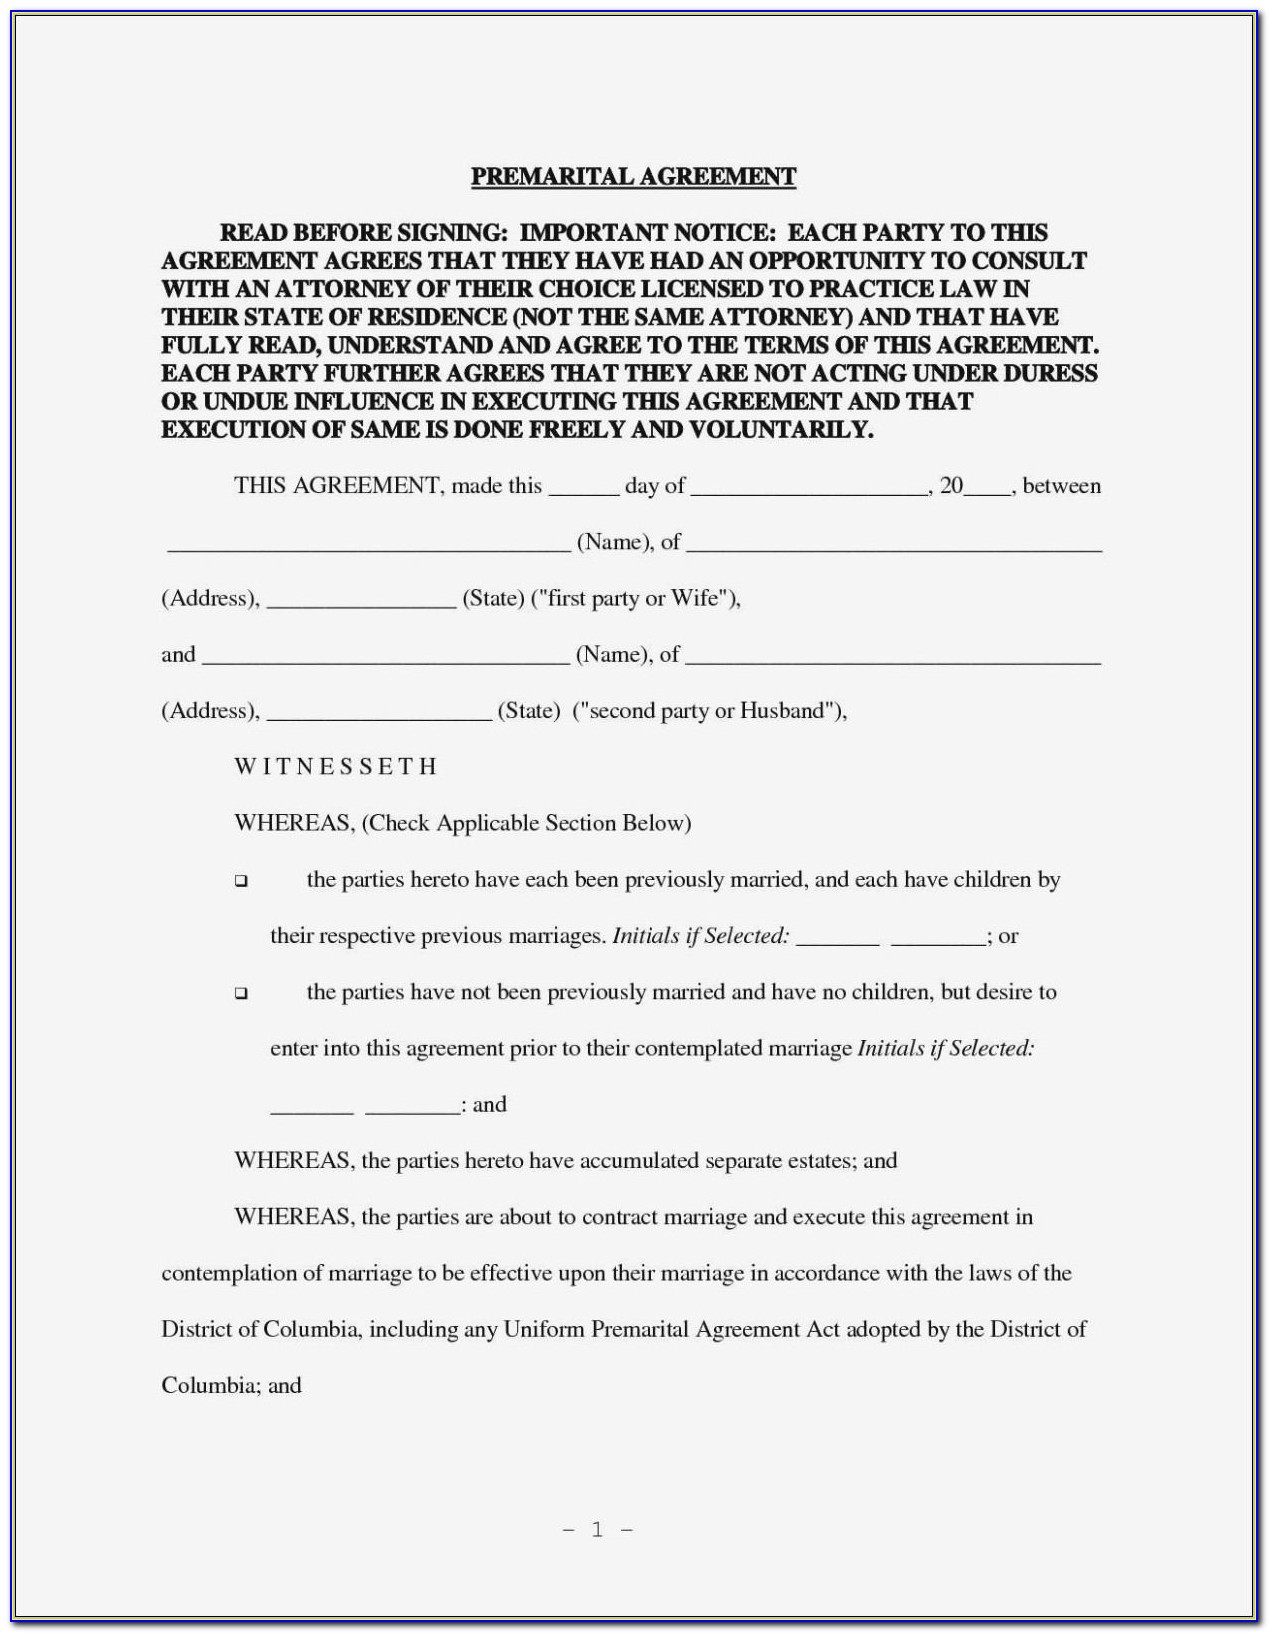 Prenuptial Agreement Form California Free Download